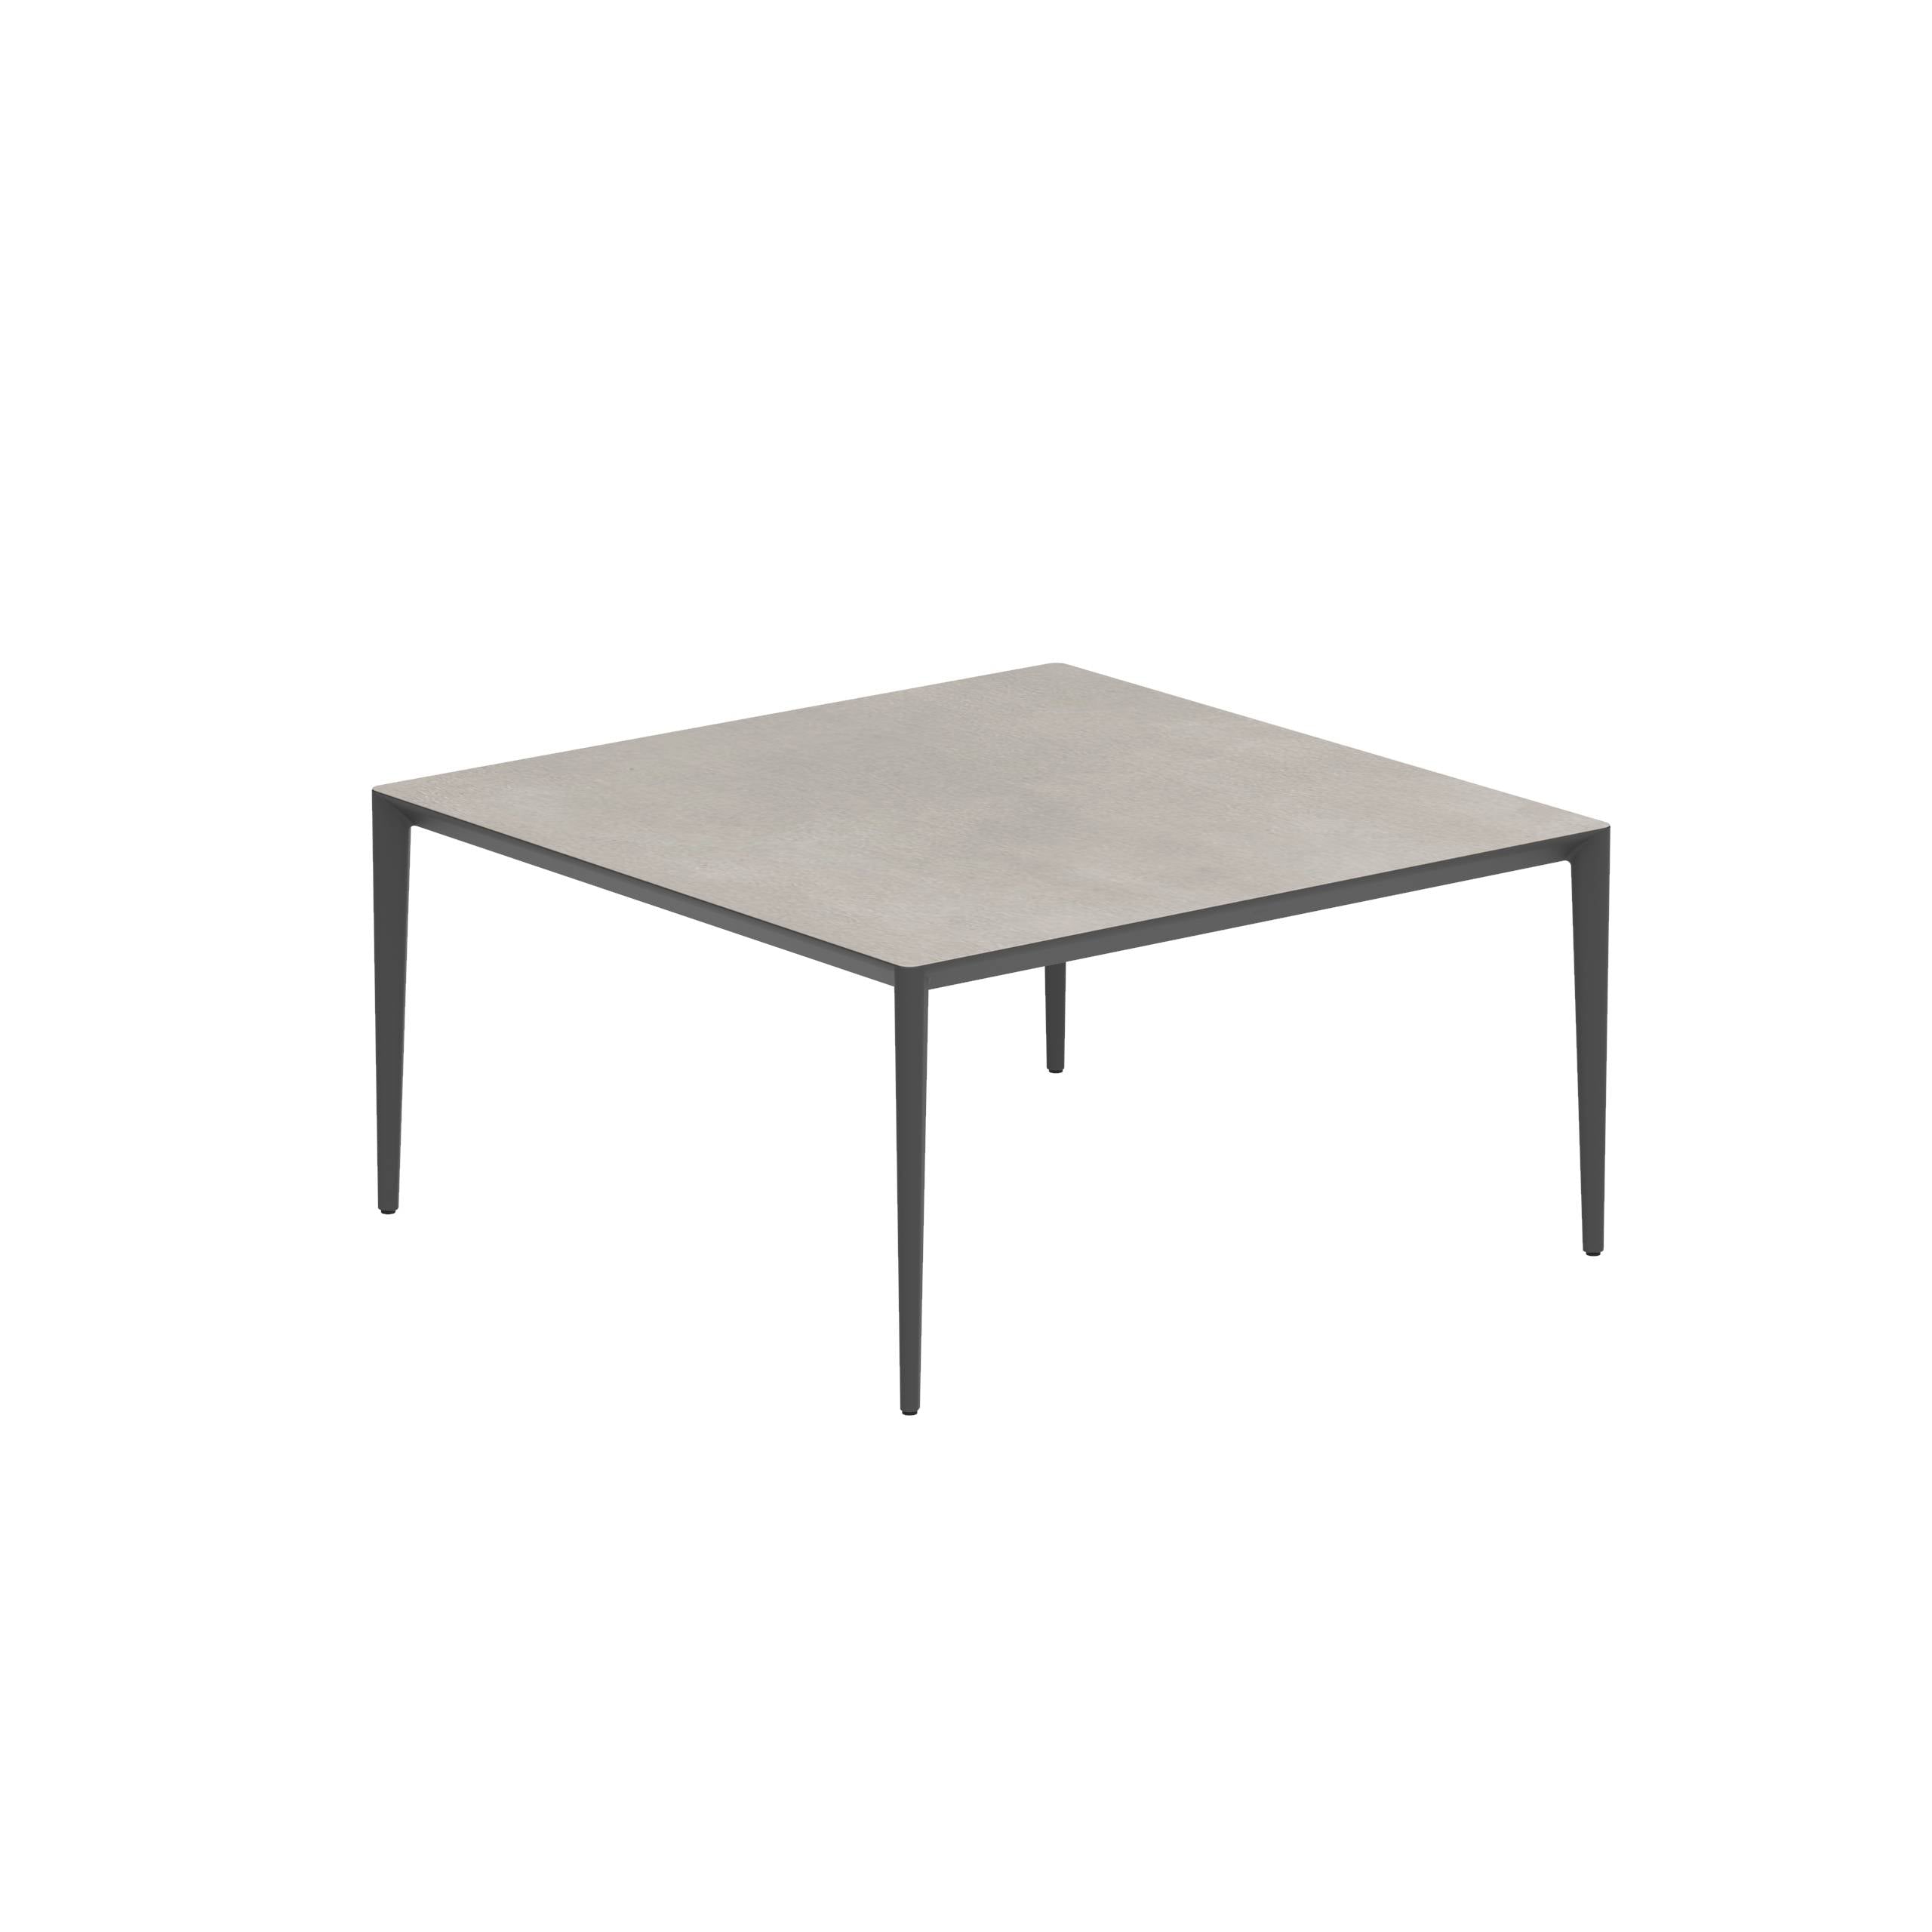 U-Nite Table 150x150cm Anthracite With Ceramic Tabletop In Cemento Luminoso